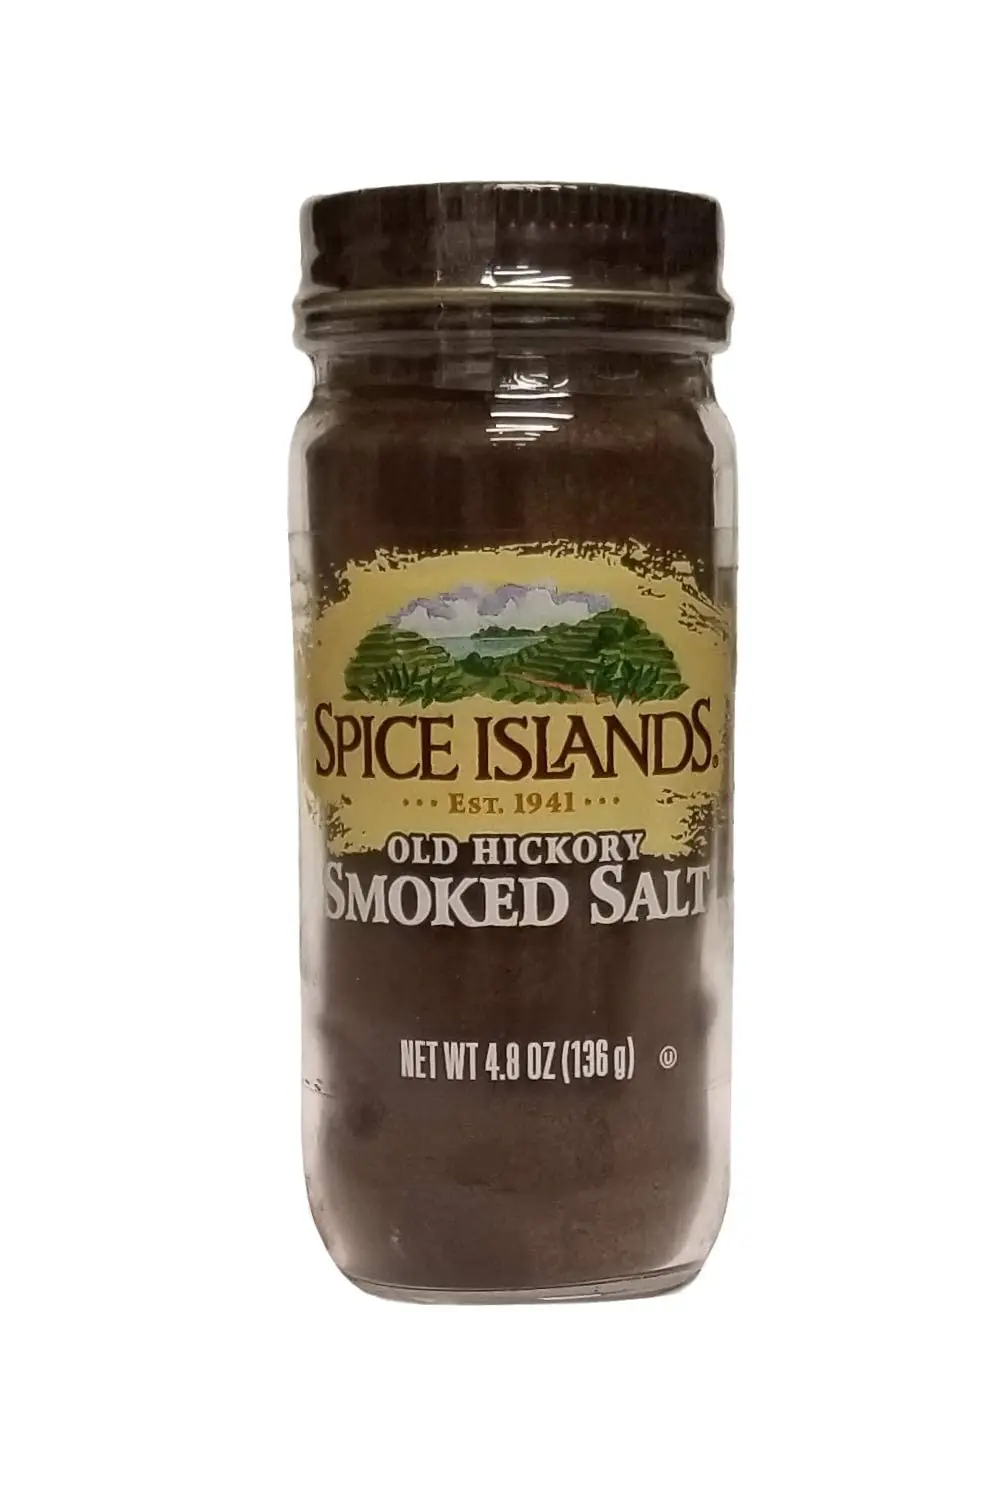 hickory smoked salt near me - What do you do with hickory smoked salt